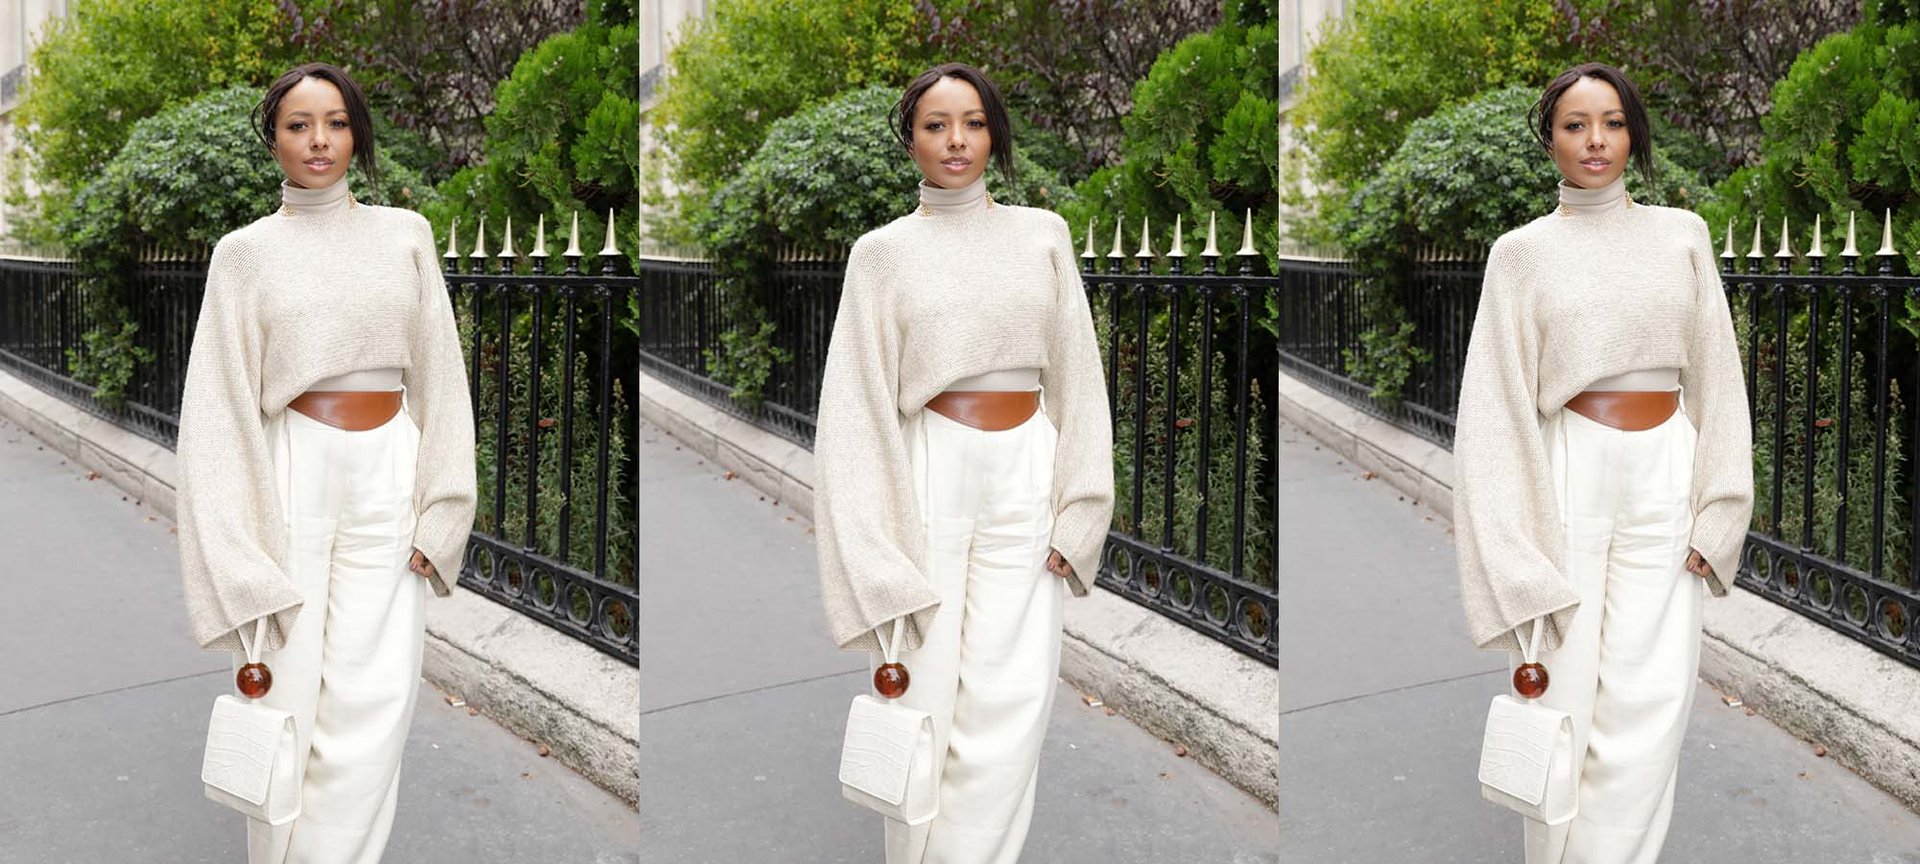 L Oreal Paris At Paris Fashion Week CMS Slide01 Bmag